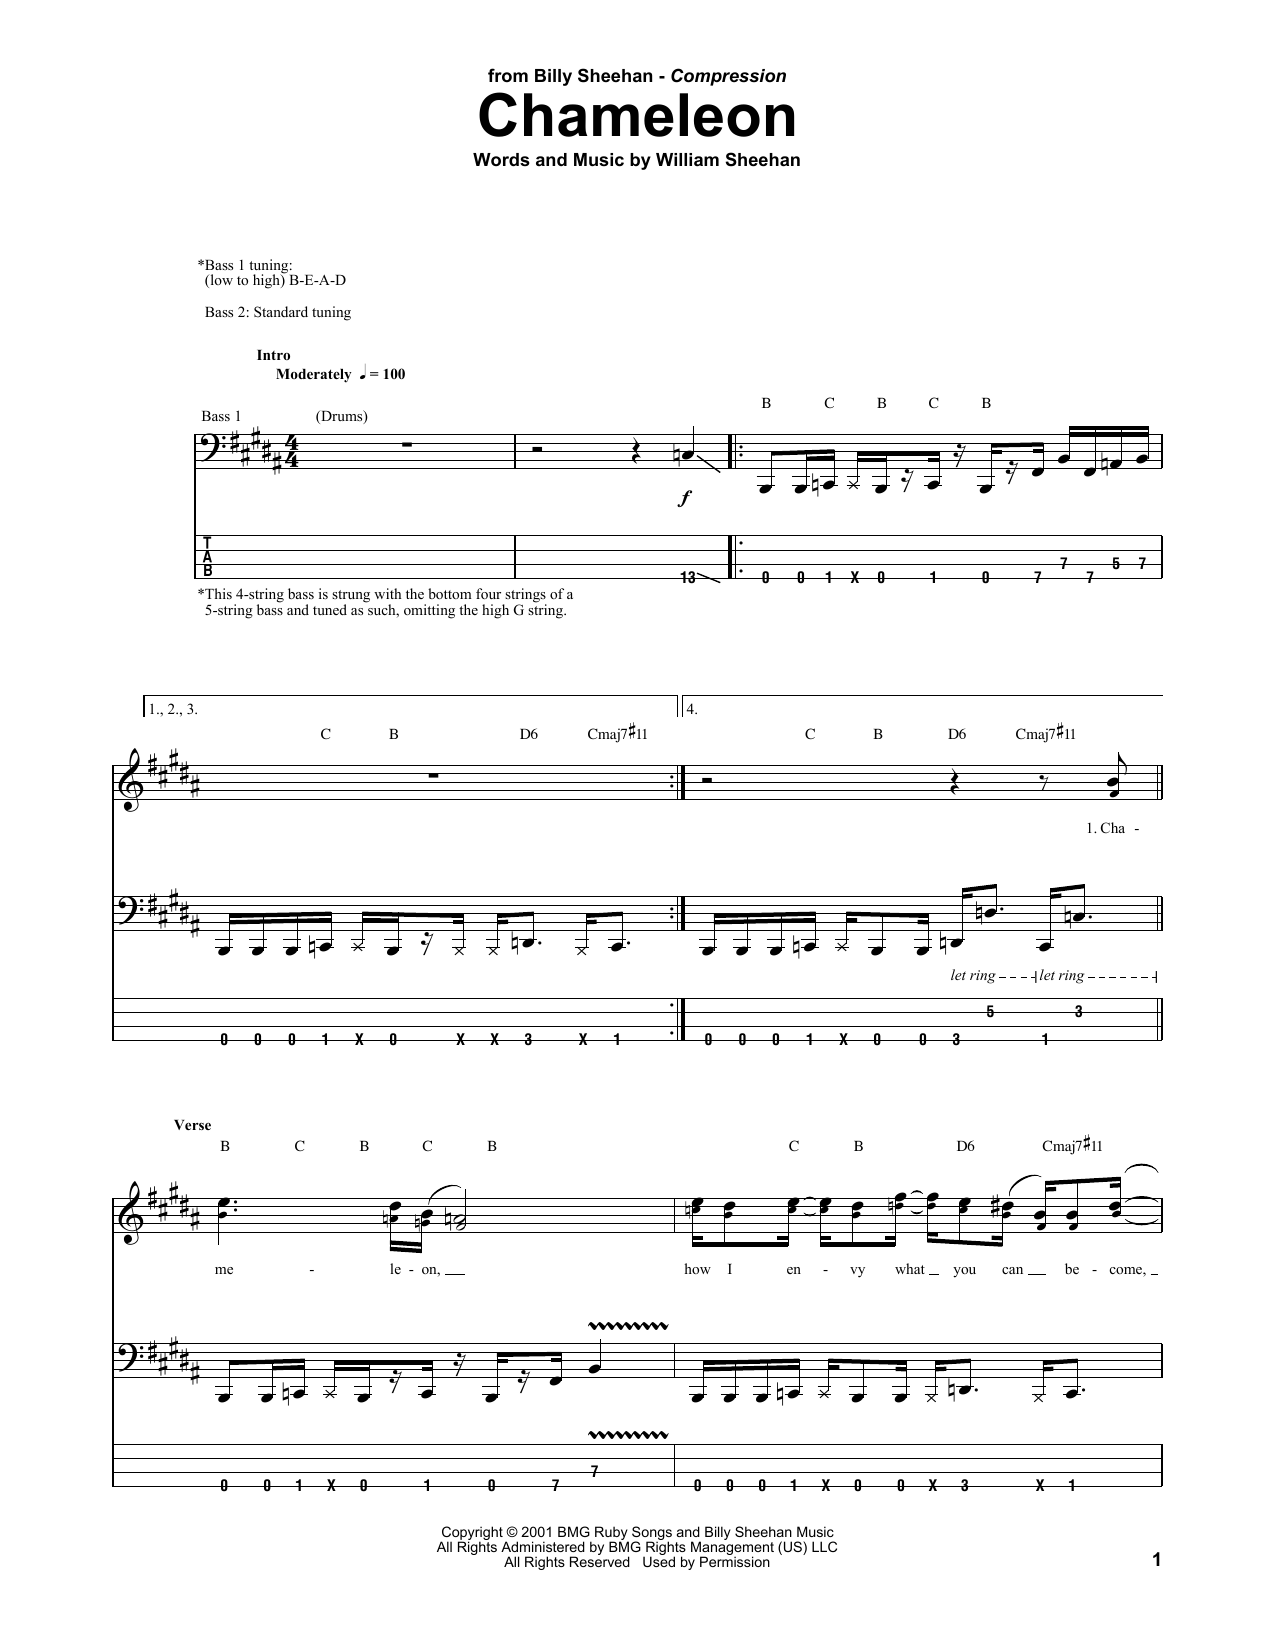 Billy Sheehan Chameleon Sheet Music Notes & Chords for Bass Guitar Tab - Download or Print PDF